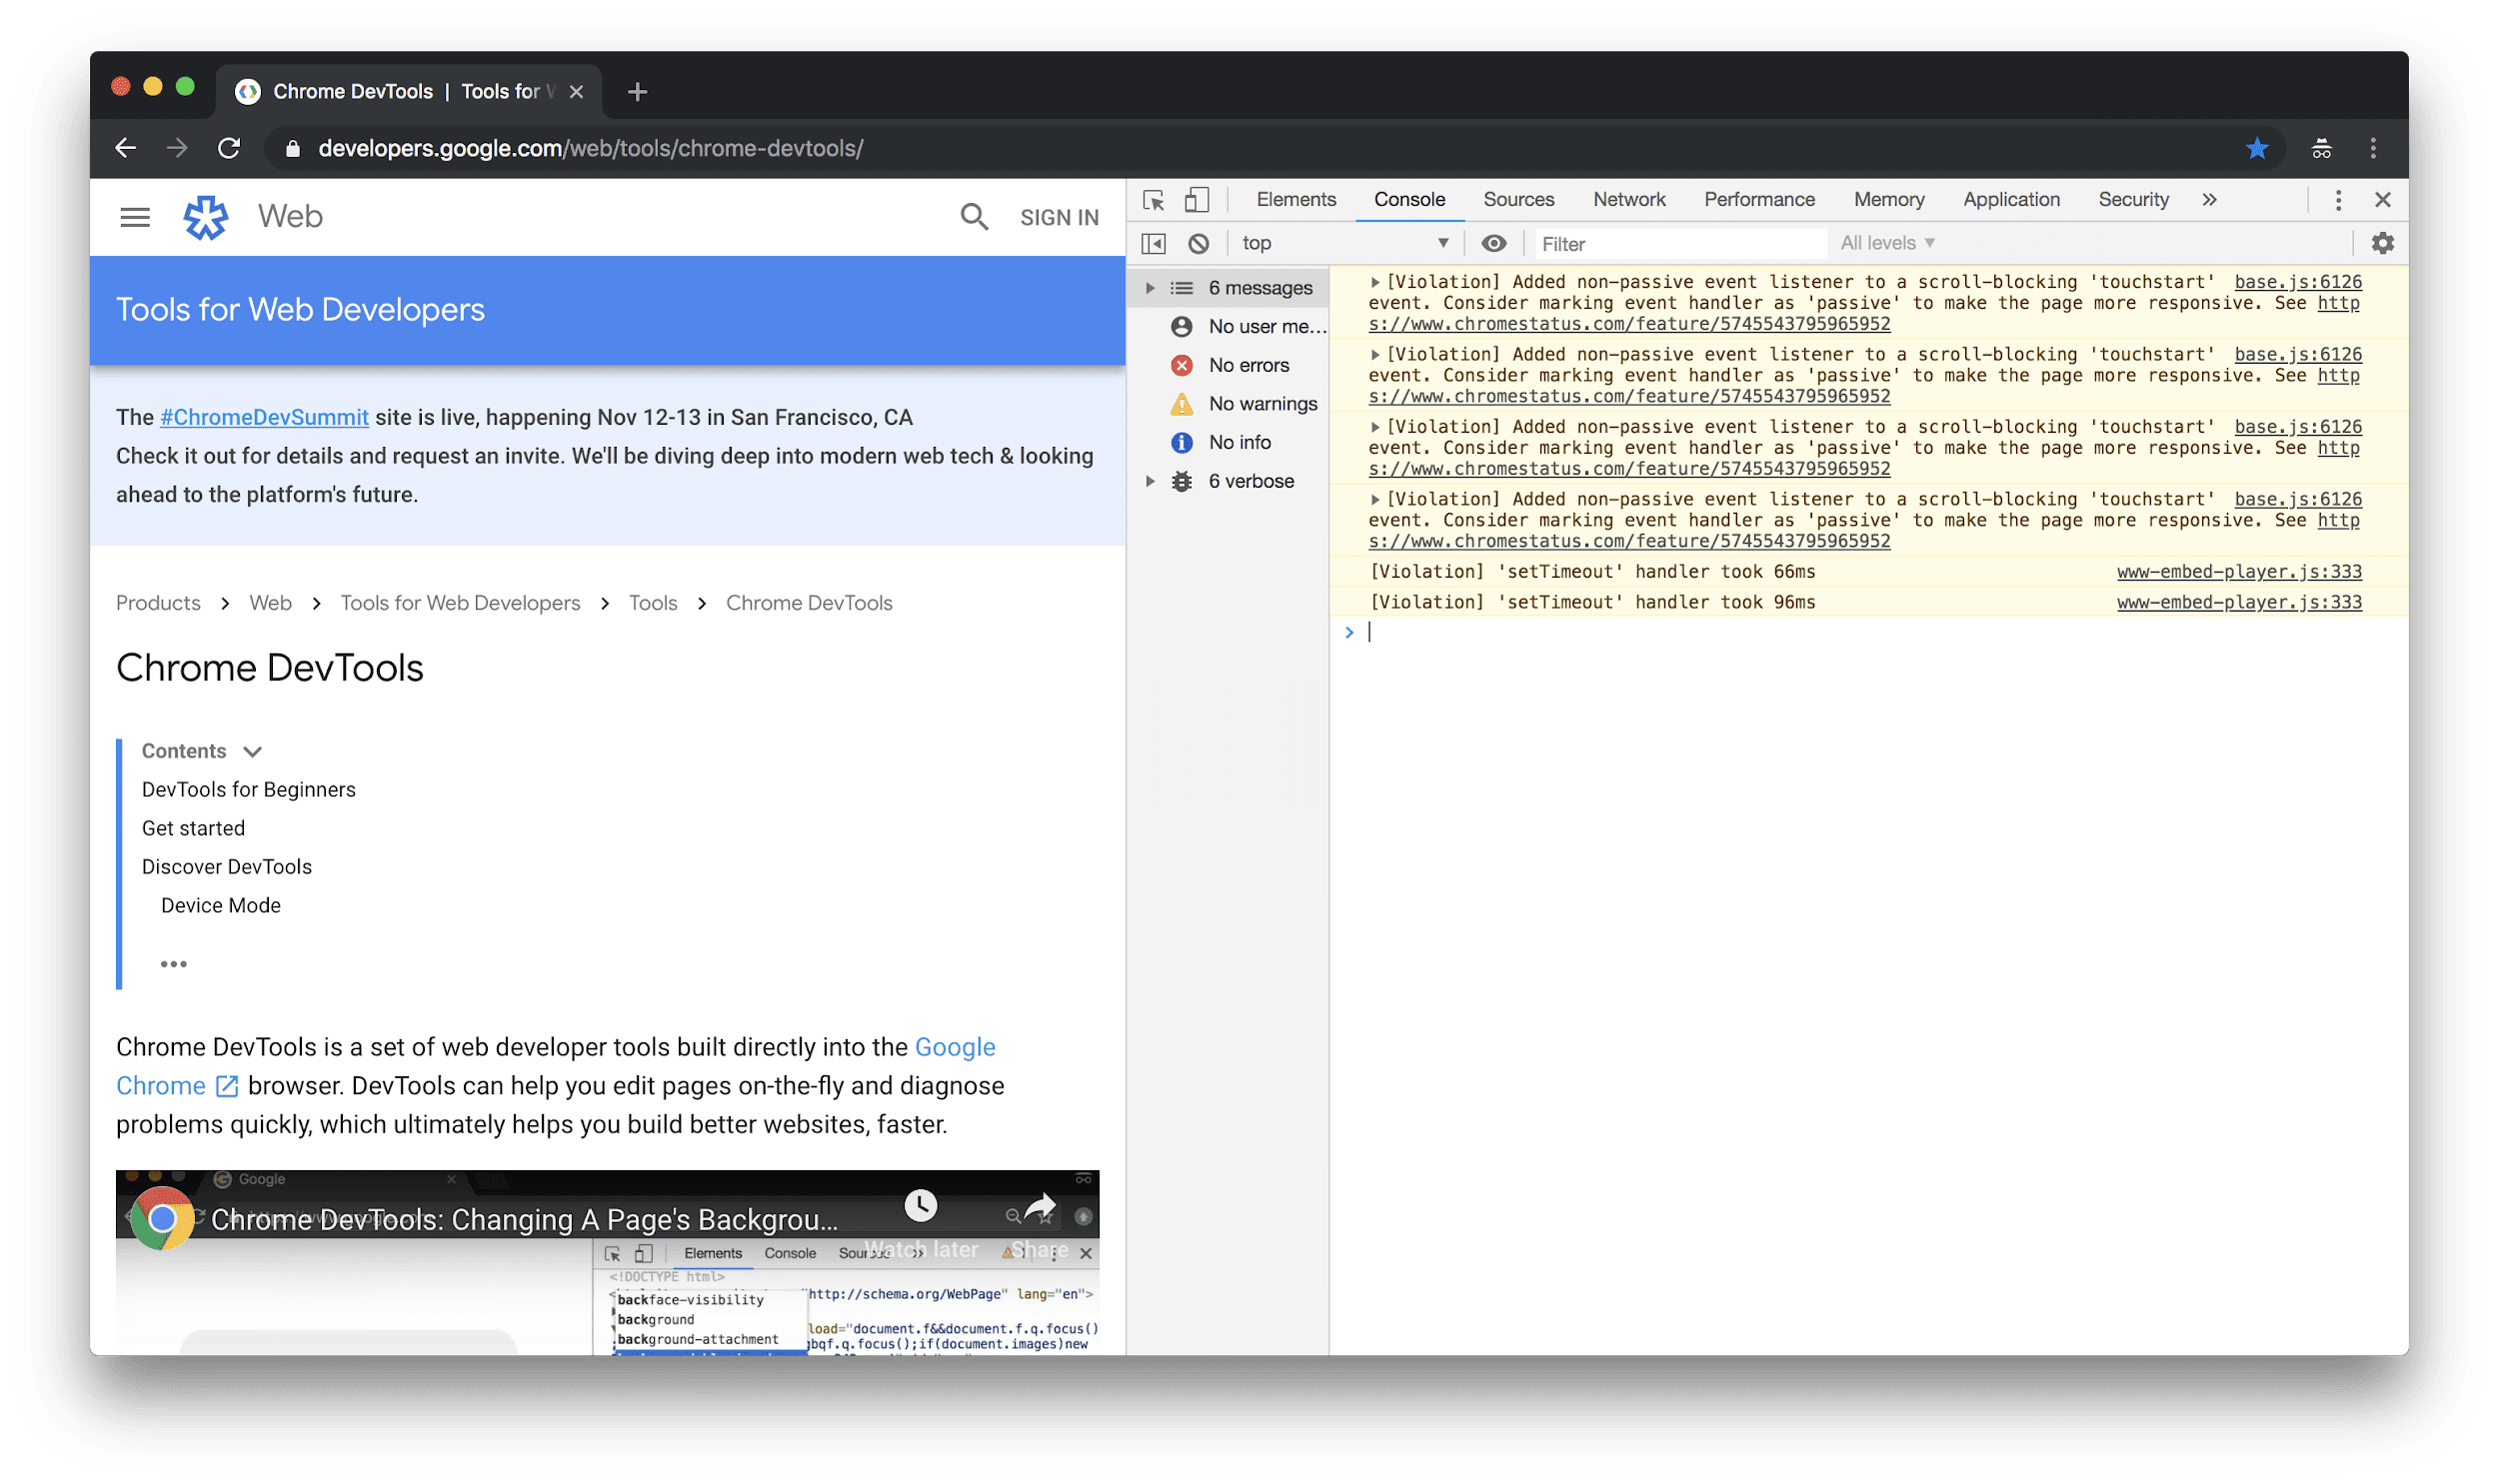 DevTools باز شد و به سمت راست صفحه متصل شد.